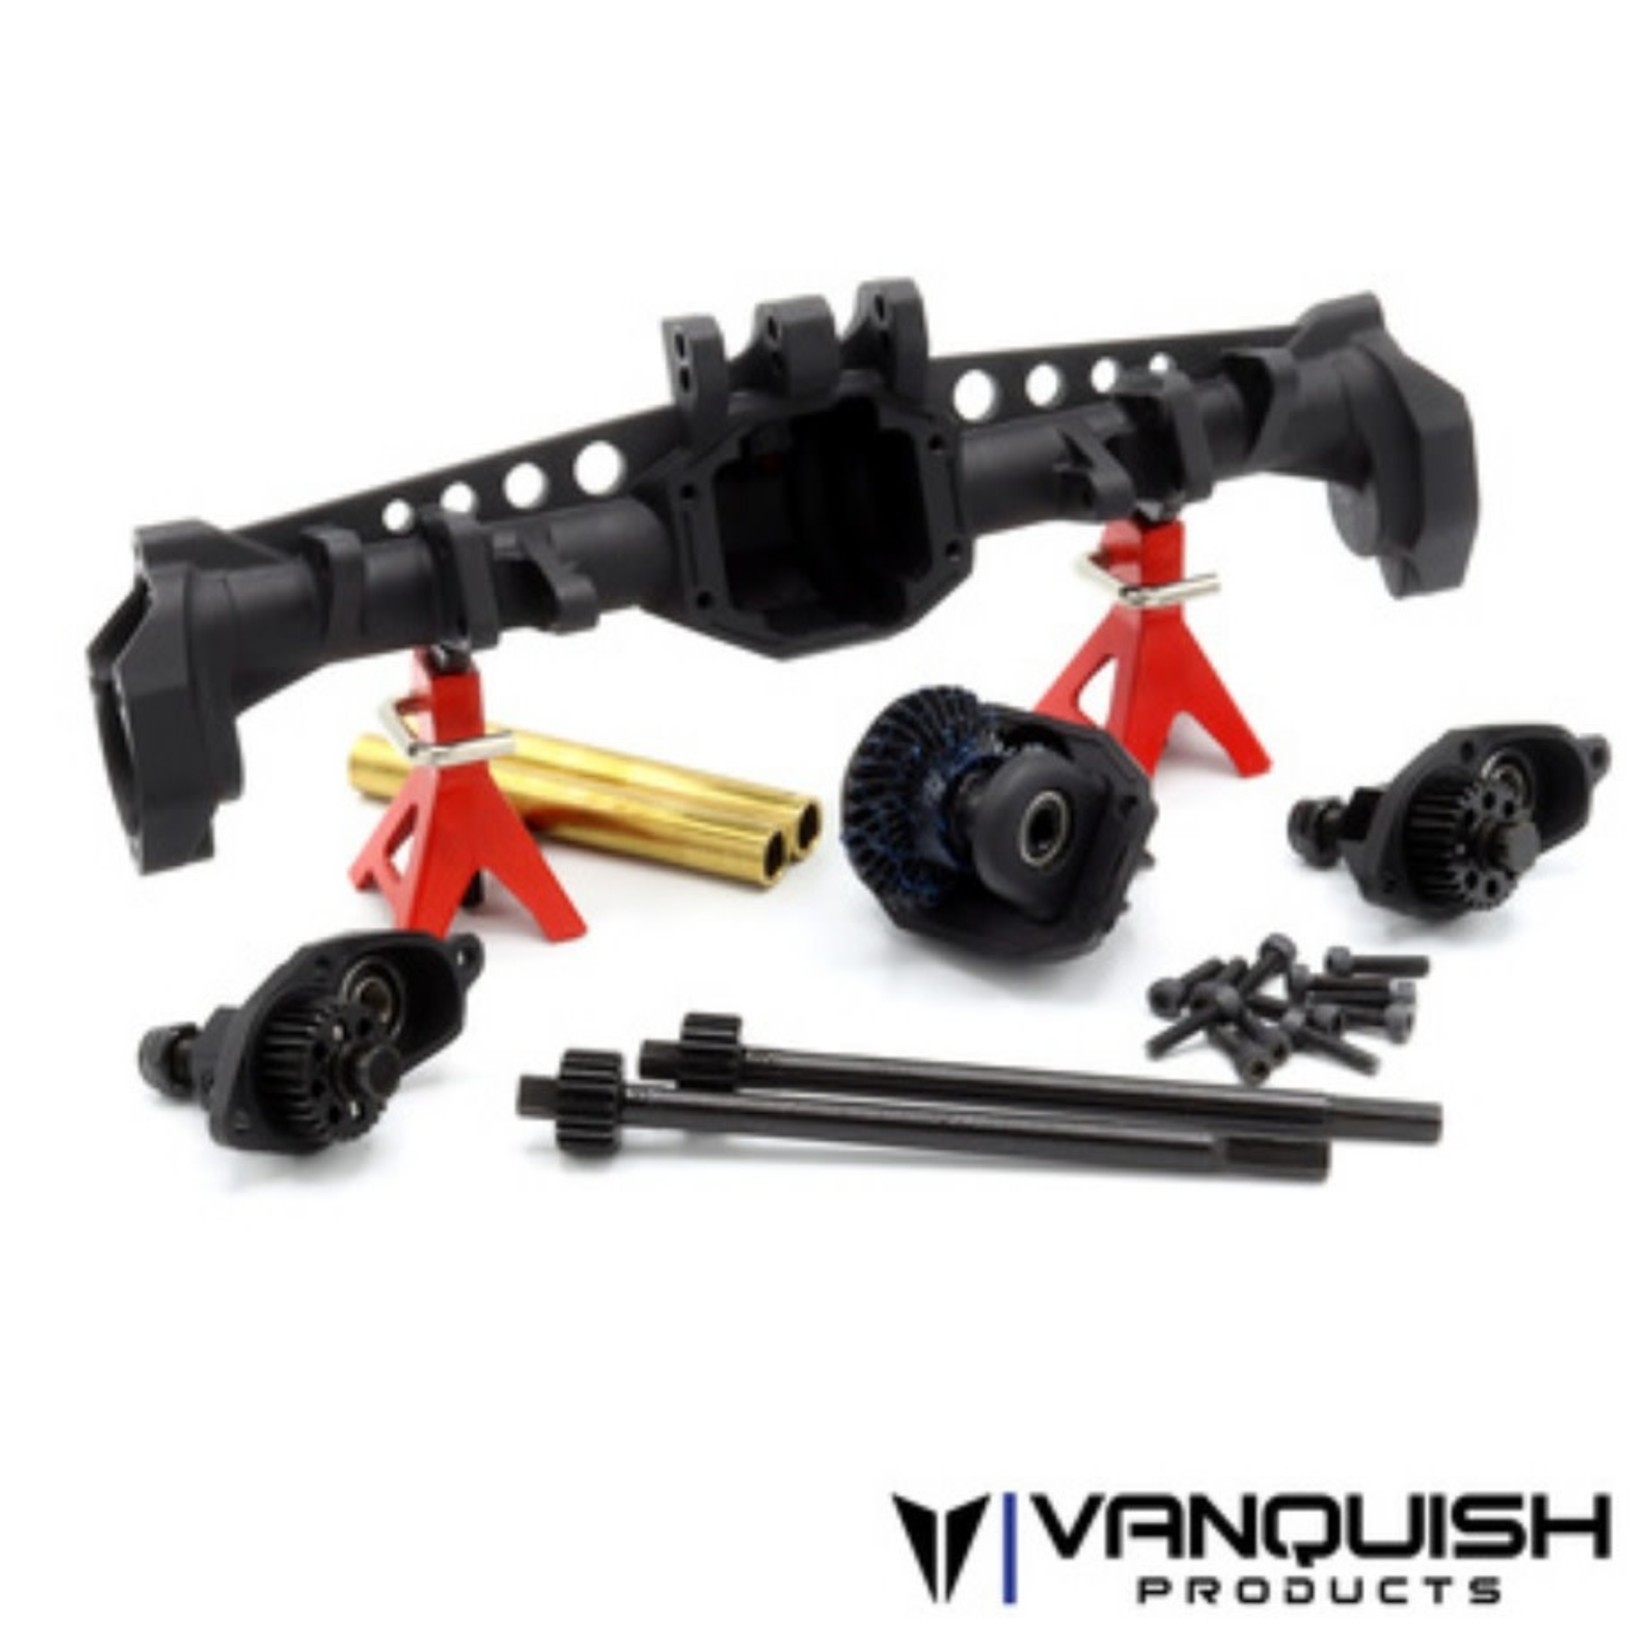 Vanquish Products Vanquish F10 Portal Front Axle Set #VPS08601